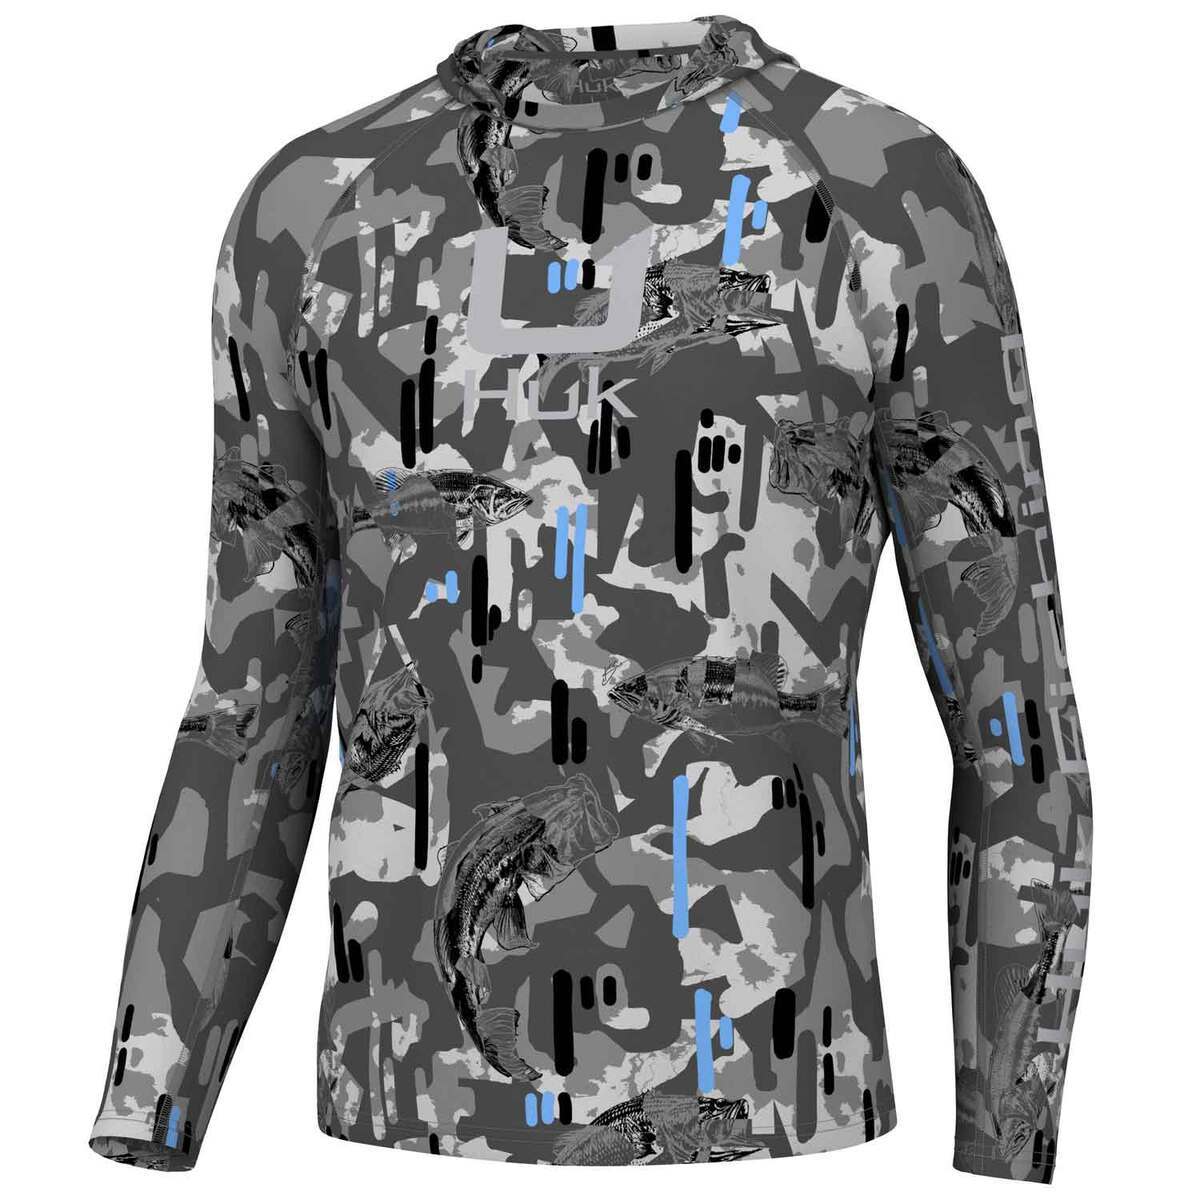 https://www.sportsmans.com/medias/huk-mens-kc-apex-vert-icon-performance-hooded-long-sleeve-fishing-shirt-night-owl-m-1837728-1.jpg?context=bWFzdGVyfGltYWdlc3wxMjg4NTZ8aW1hZ2UvanBlZ3xhR0UyTDJneVl5OHhNakE0TkRrek16a3hPRGMxTUM4eE1qQXdMV052Ym5abGNuTnBiMjVHYjNKdFlYUmZZbUZ6WlMxamIyNTJaWEp6YVc5dVJtOXliV0YwWDNOdGR5MHhPRE0zTnpJNExURXVhbkJufGI1MzQ2MjMwMjdkOGM3MGE5MzIwOTk5YTY3OGE4YjFiZTI3ZDhlNTc0MTRlOTVmZmNmMjk0YzFhOGZkNzY2Njc